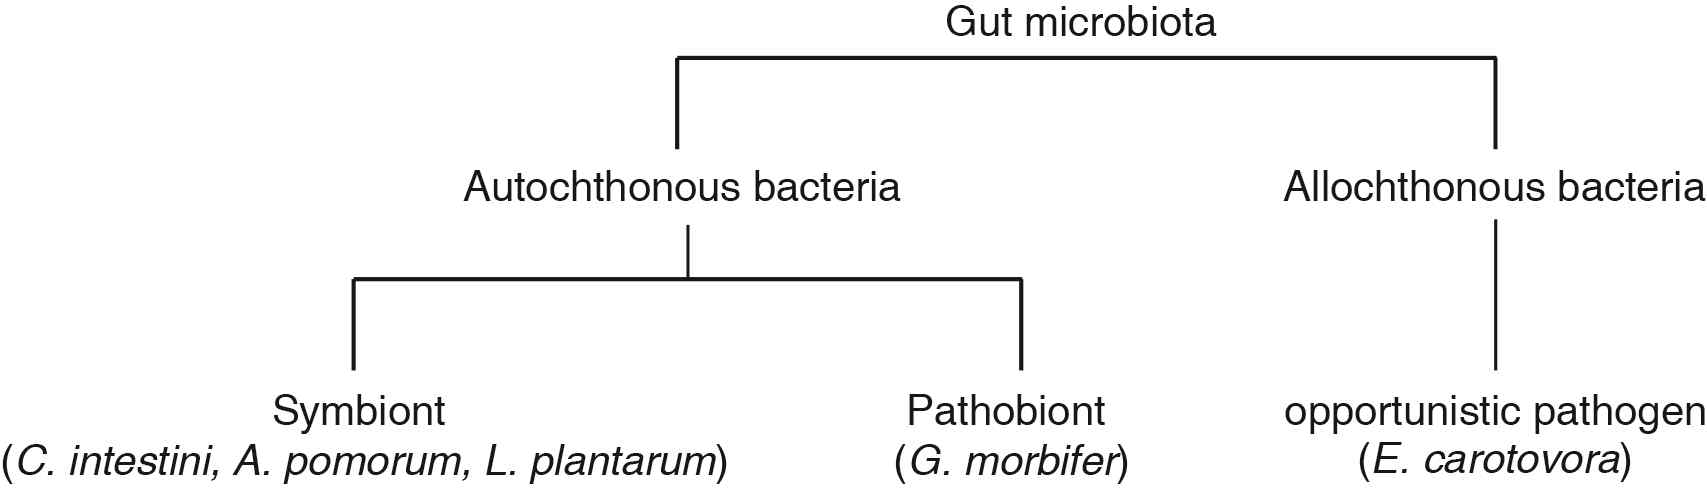 Autochthonous 박테리아와 allochthonous 박테리아로 이루어진 초파리 장내 미생물의 구성.